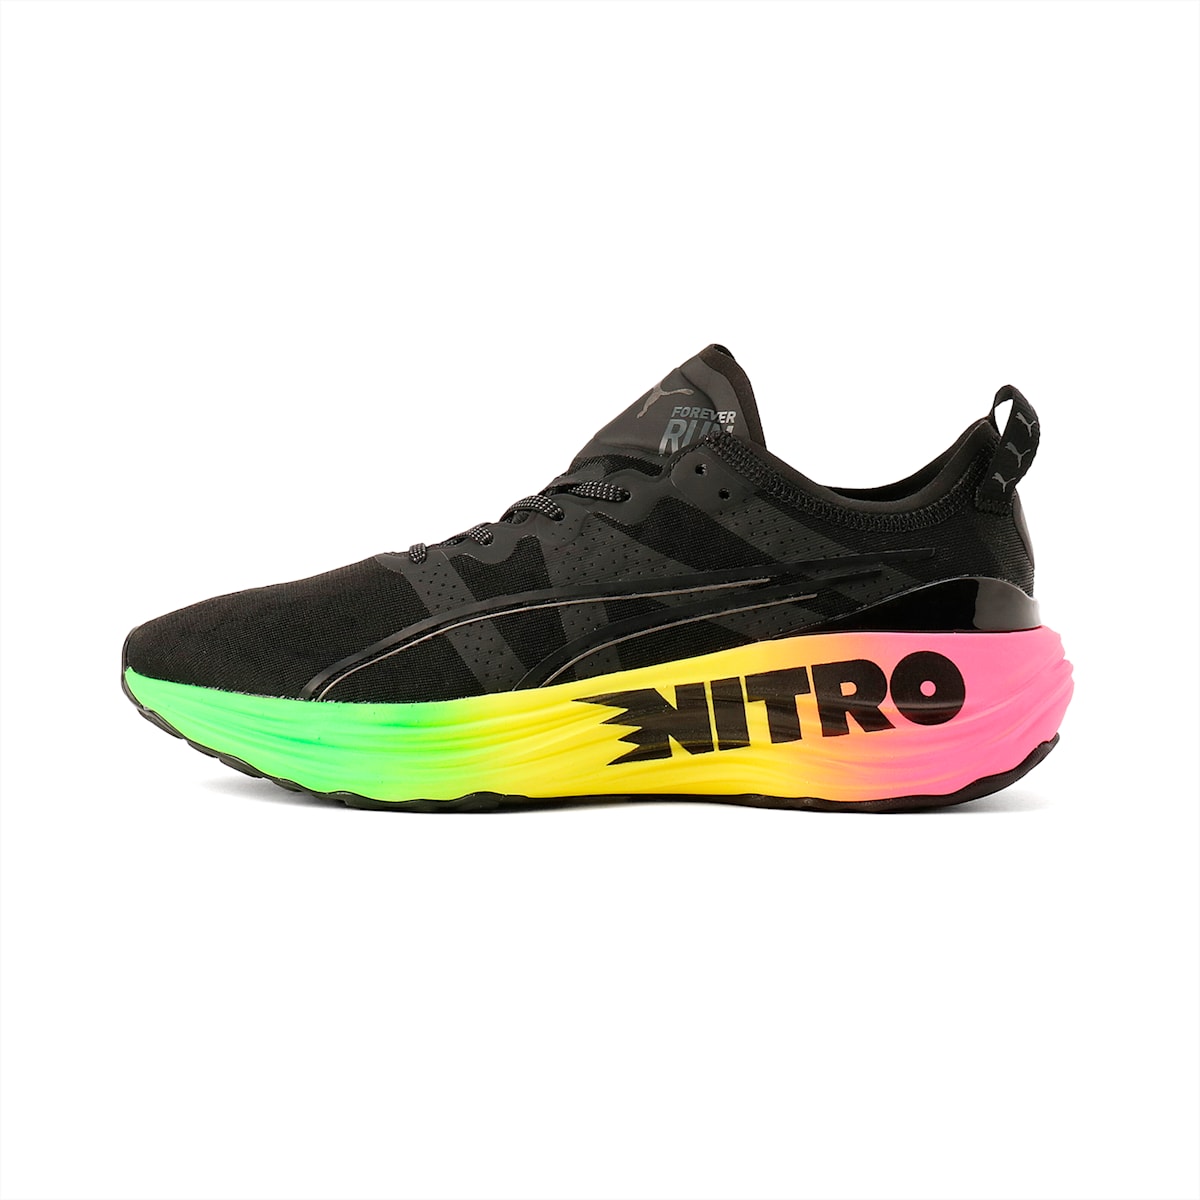 ForeverRUN NITRO Futrograde Running Shoes